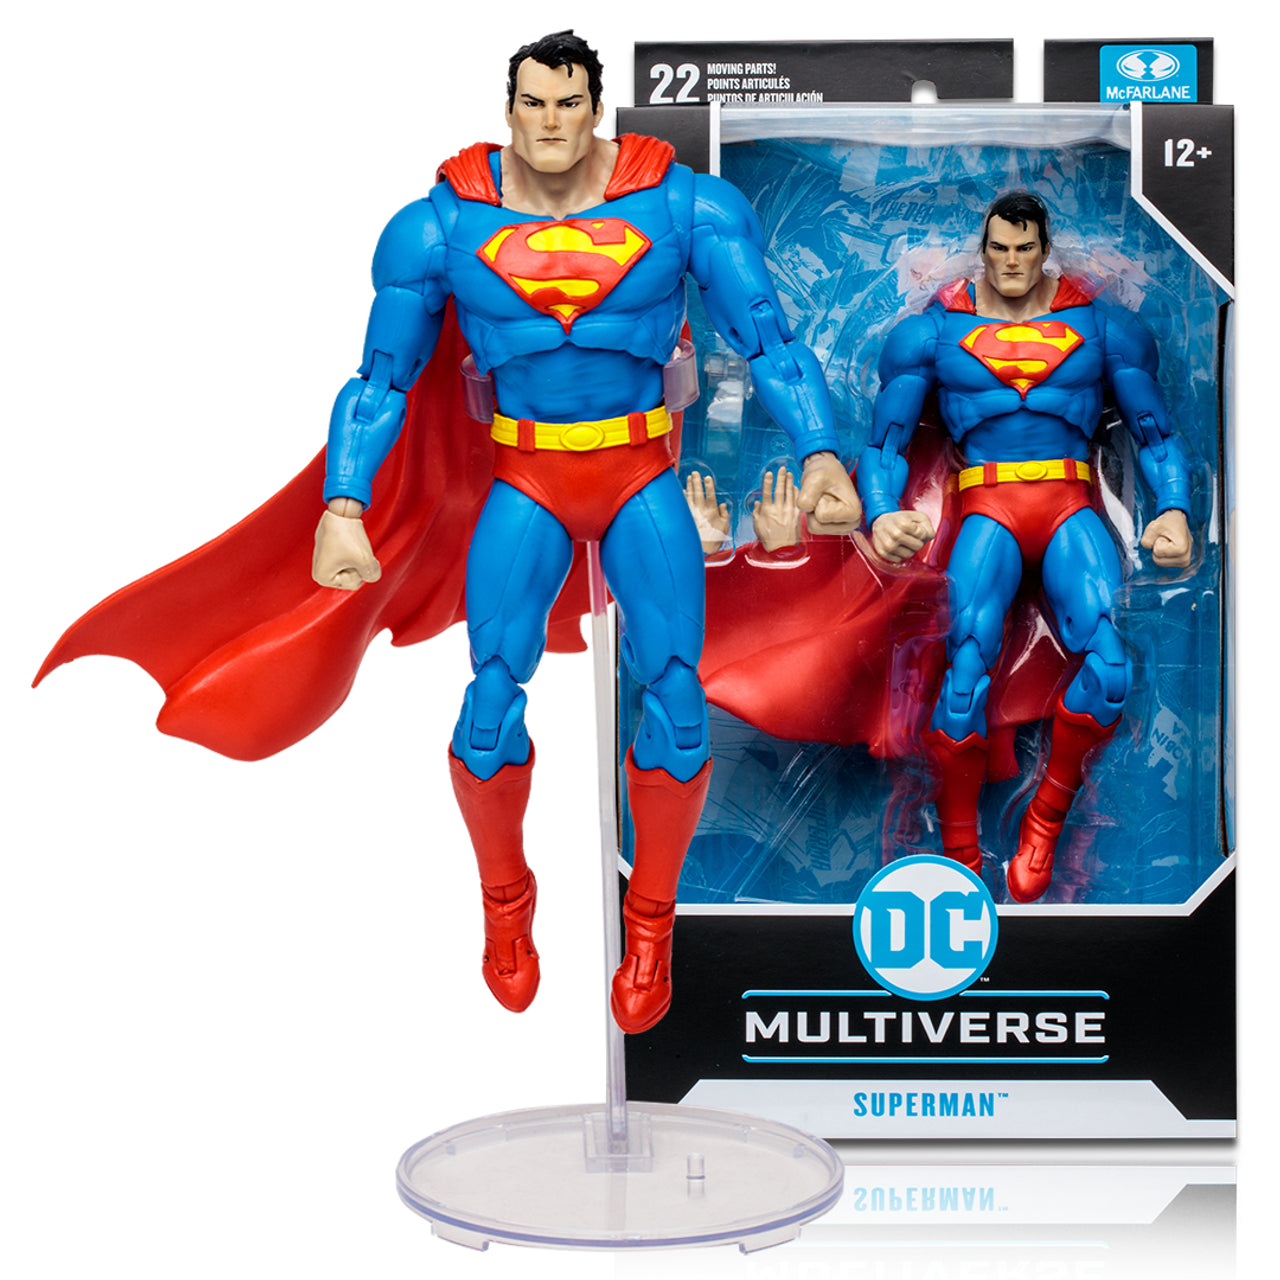 McFarlane Toys DC Multiverse Superman (Hush) Action Figure Toy - Heretoserveyou